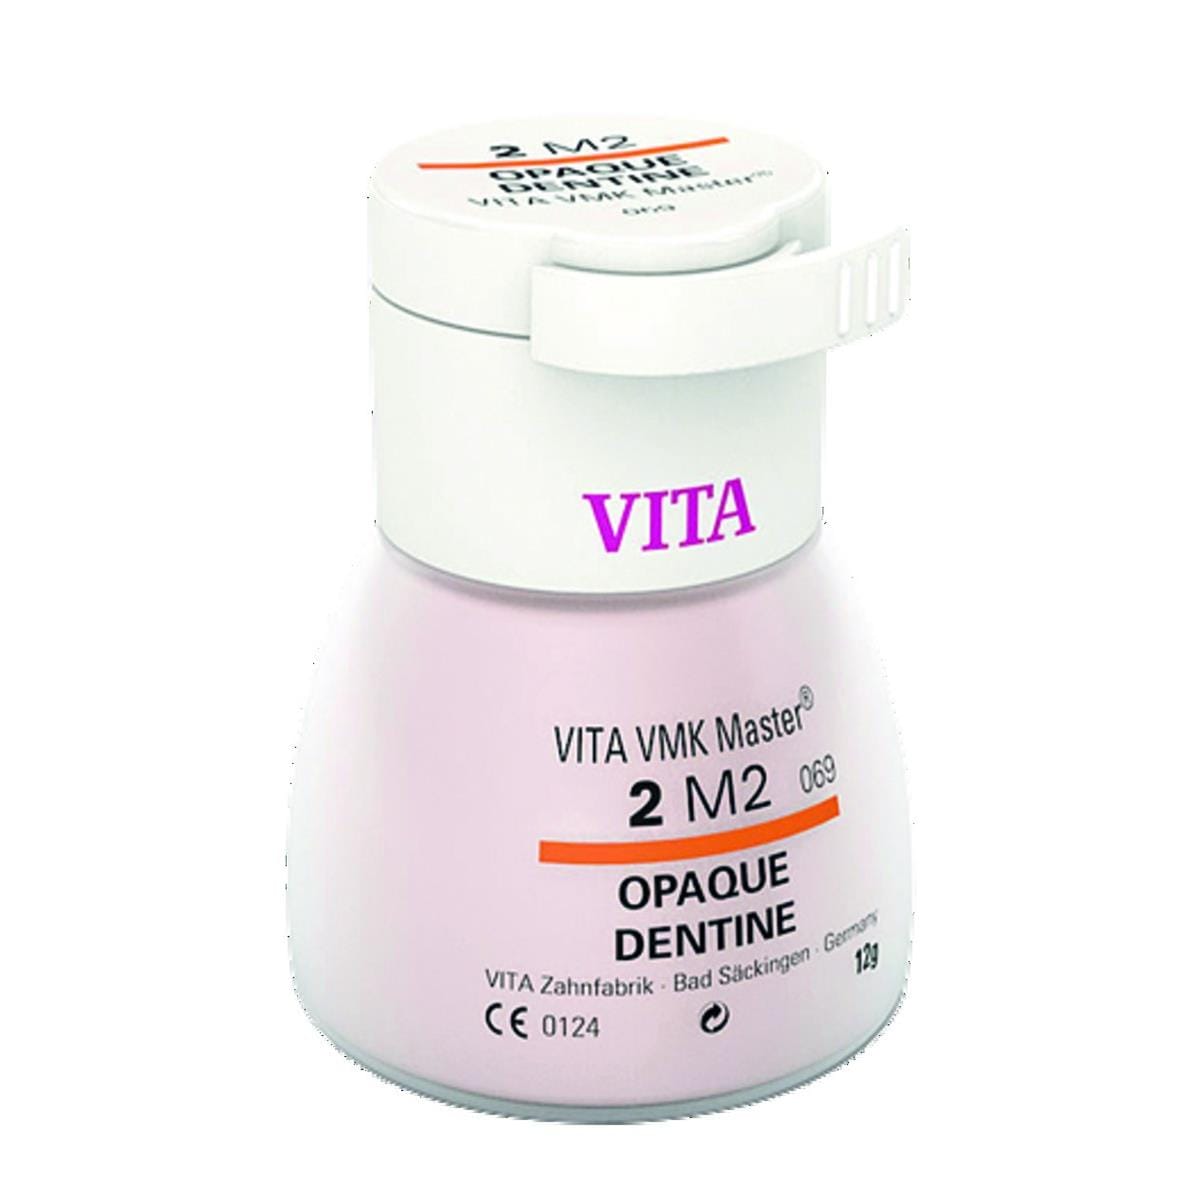 VMK Master VITA - Dentine Opaque - 3R2,5 - Le flacon de 12 g